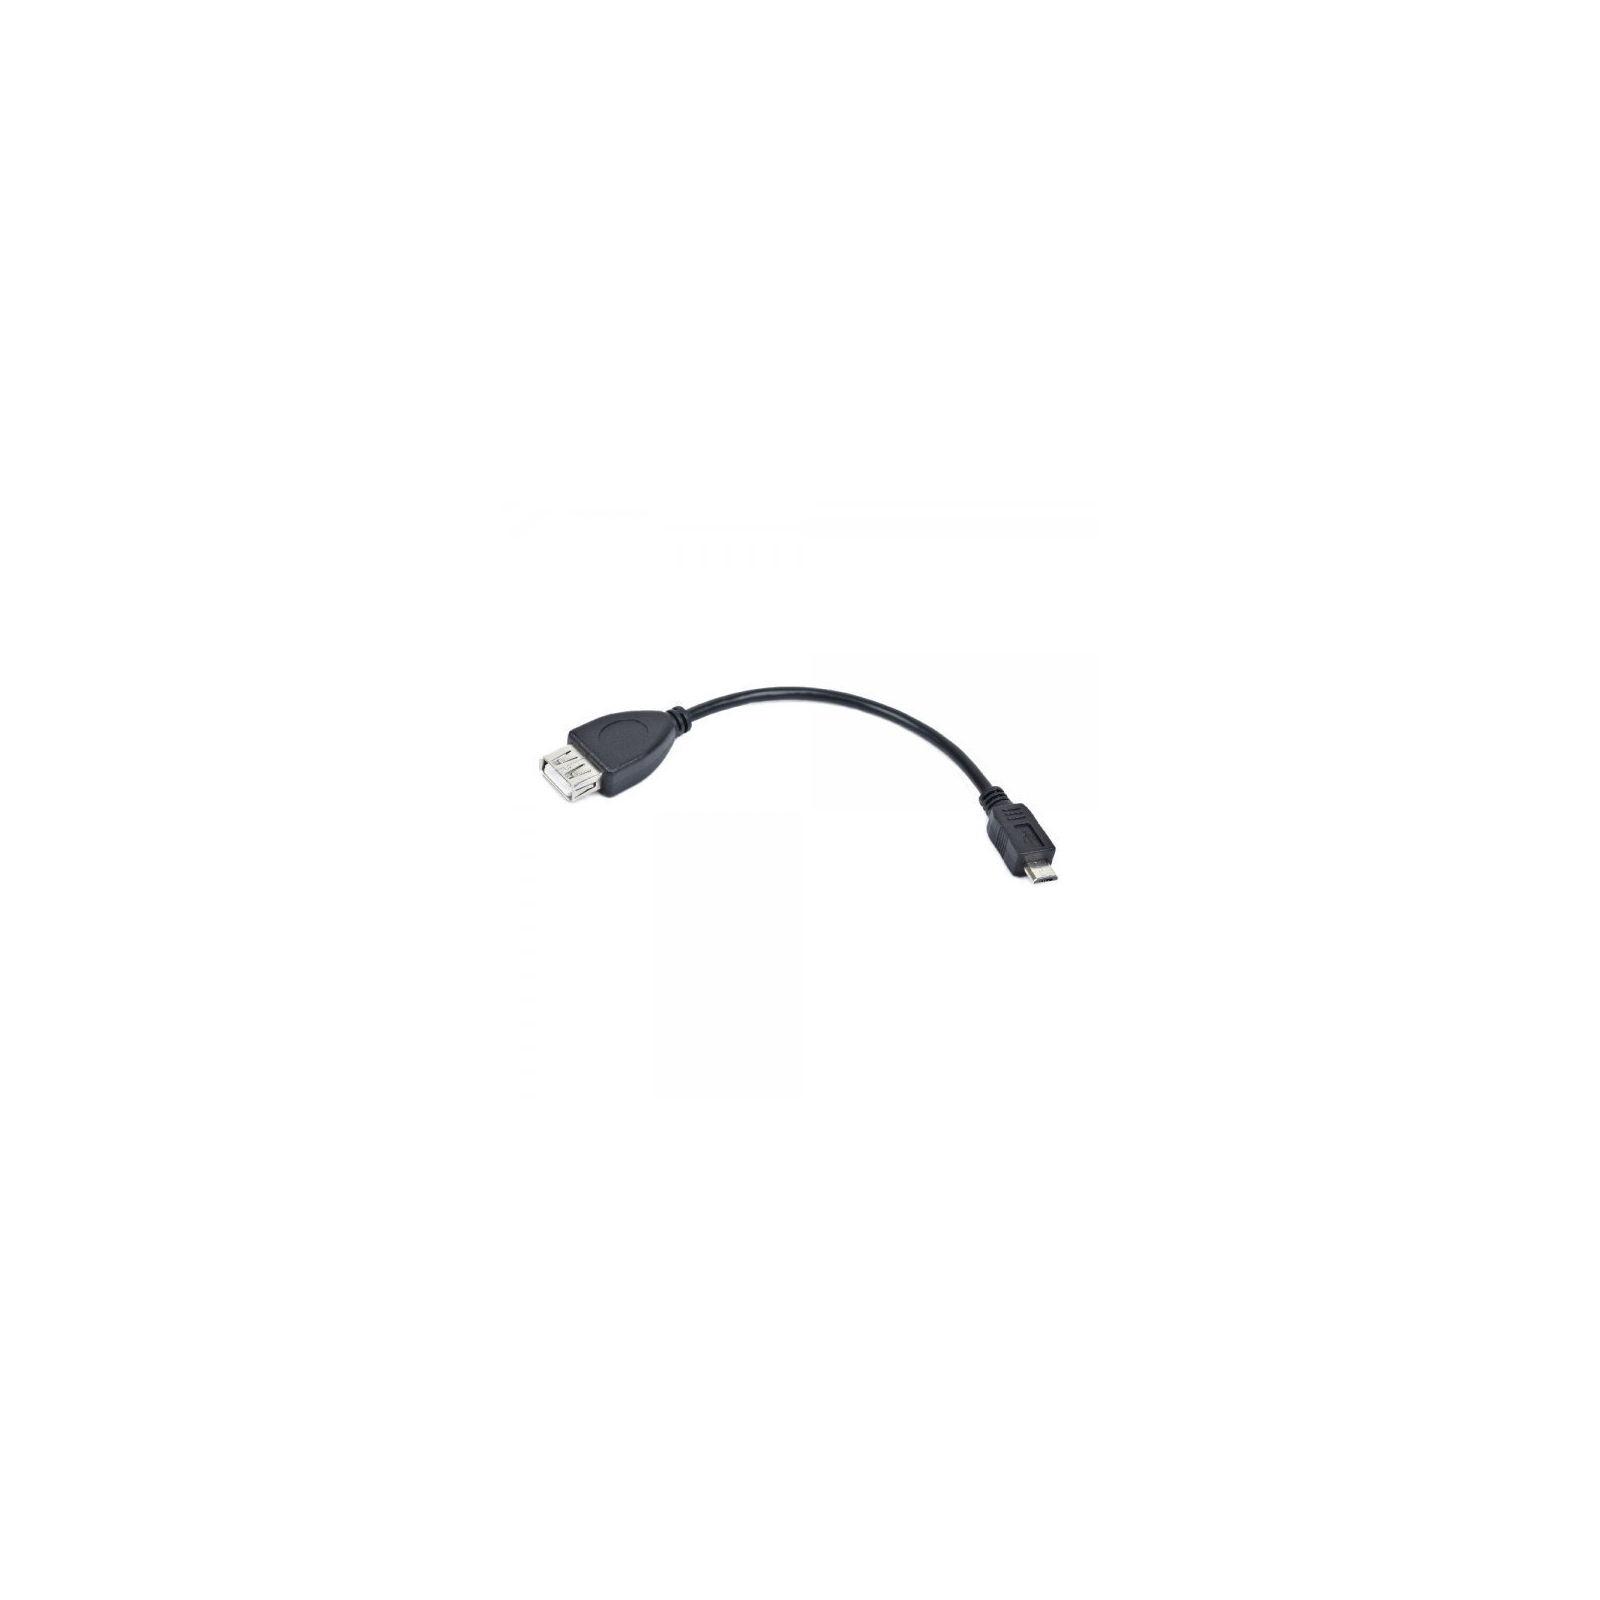 Дата кабель OTG USB 2.0 AF to Micro 5P 0.15m Maxxter (U-AFM-OTG)